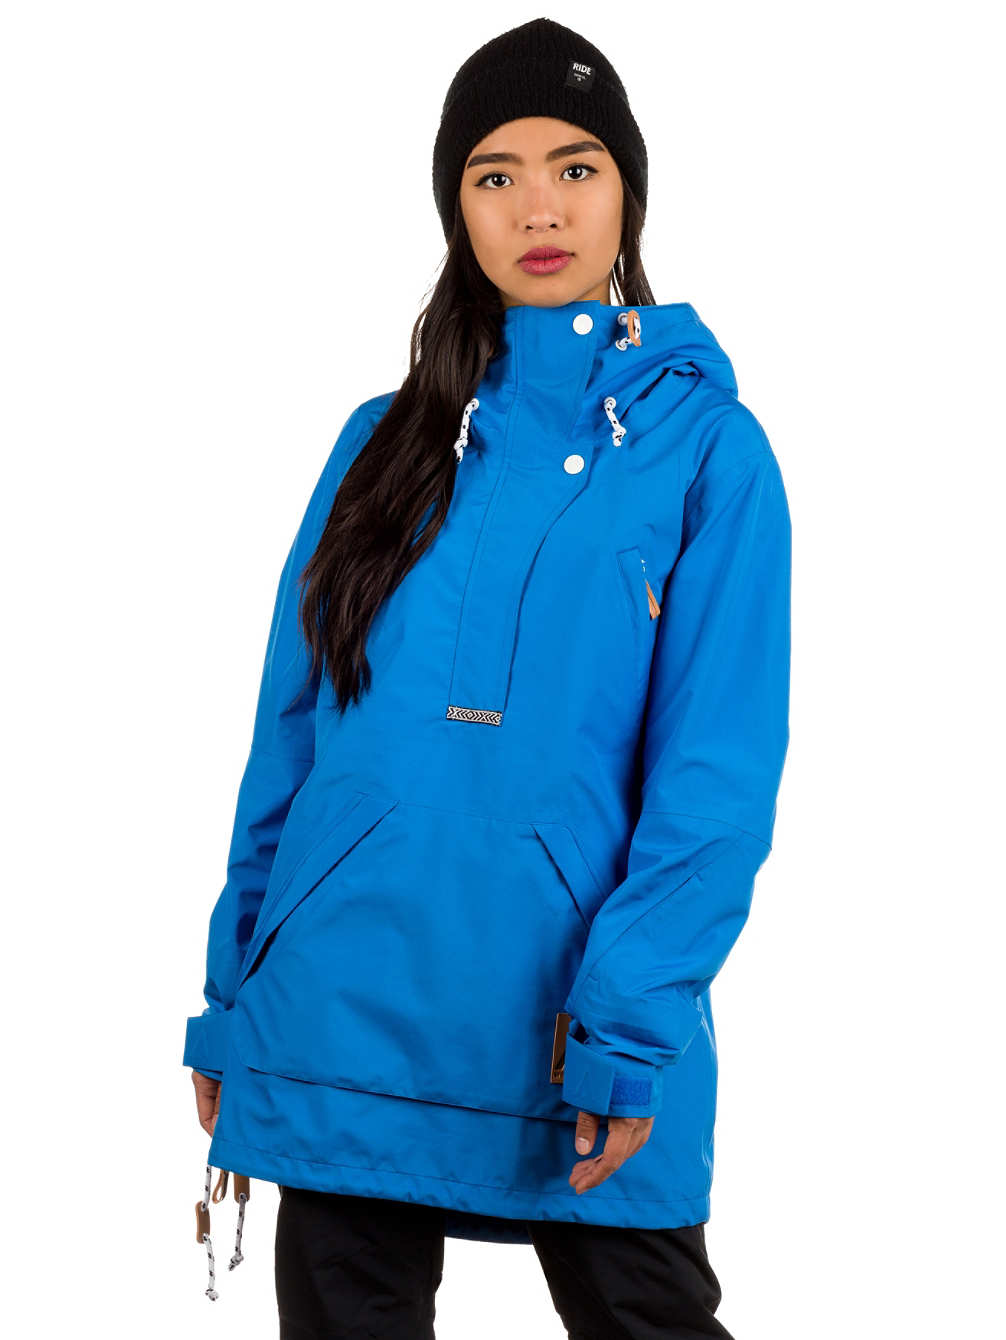 ColourWear KJ Women's Ski/Snowboard Jacket | Absolute-Snow